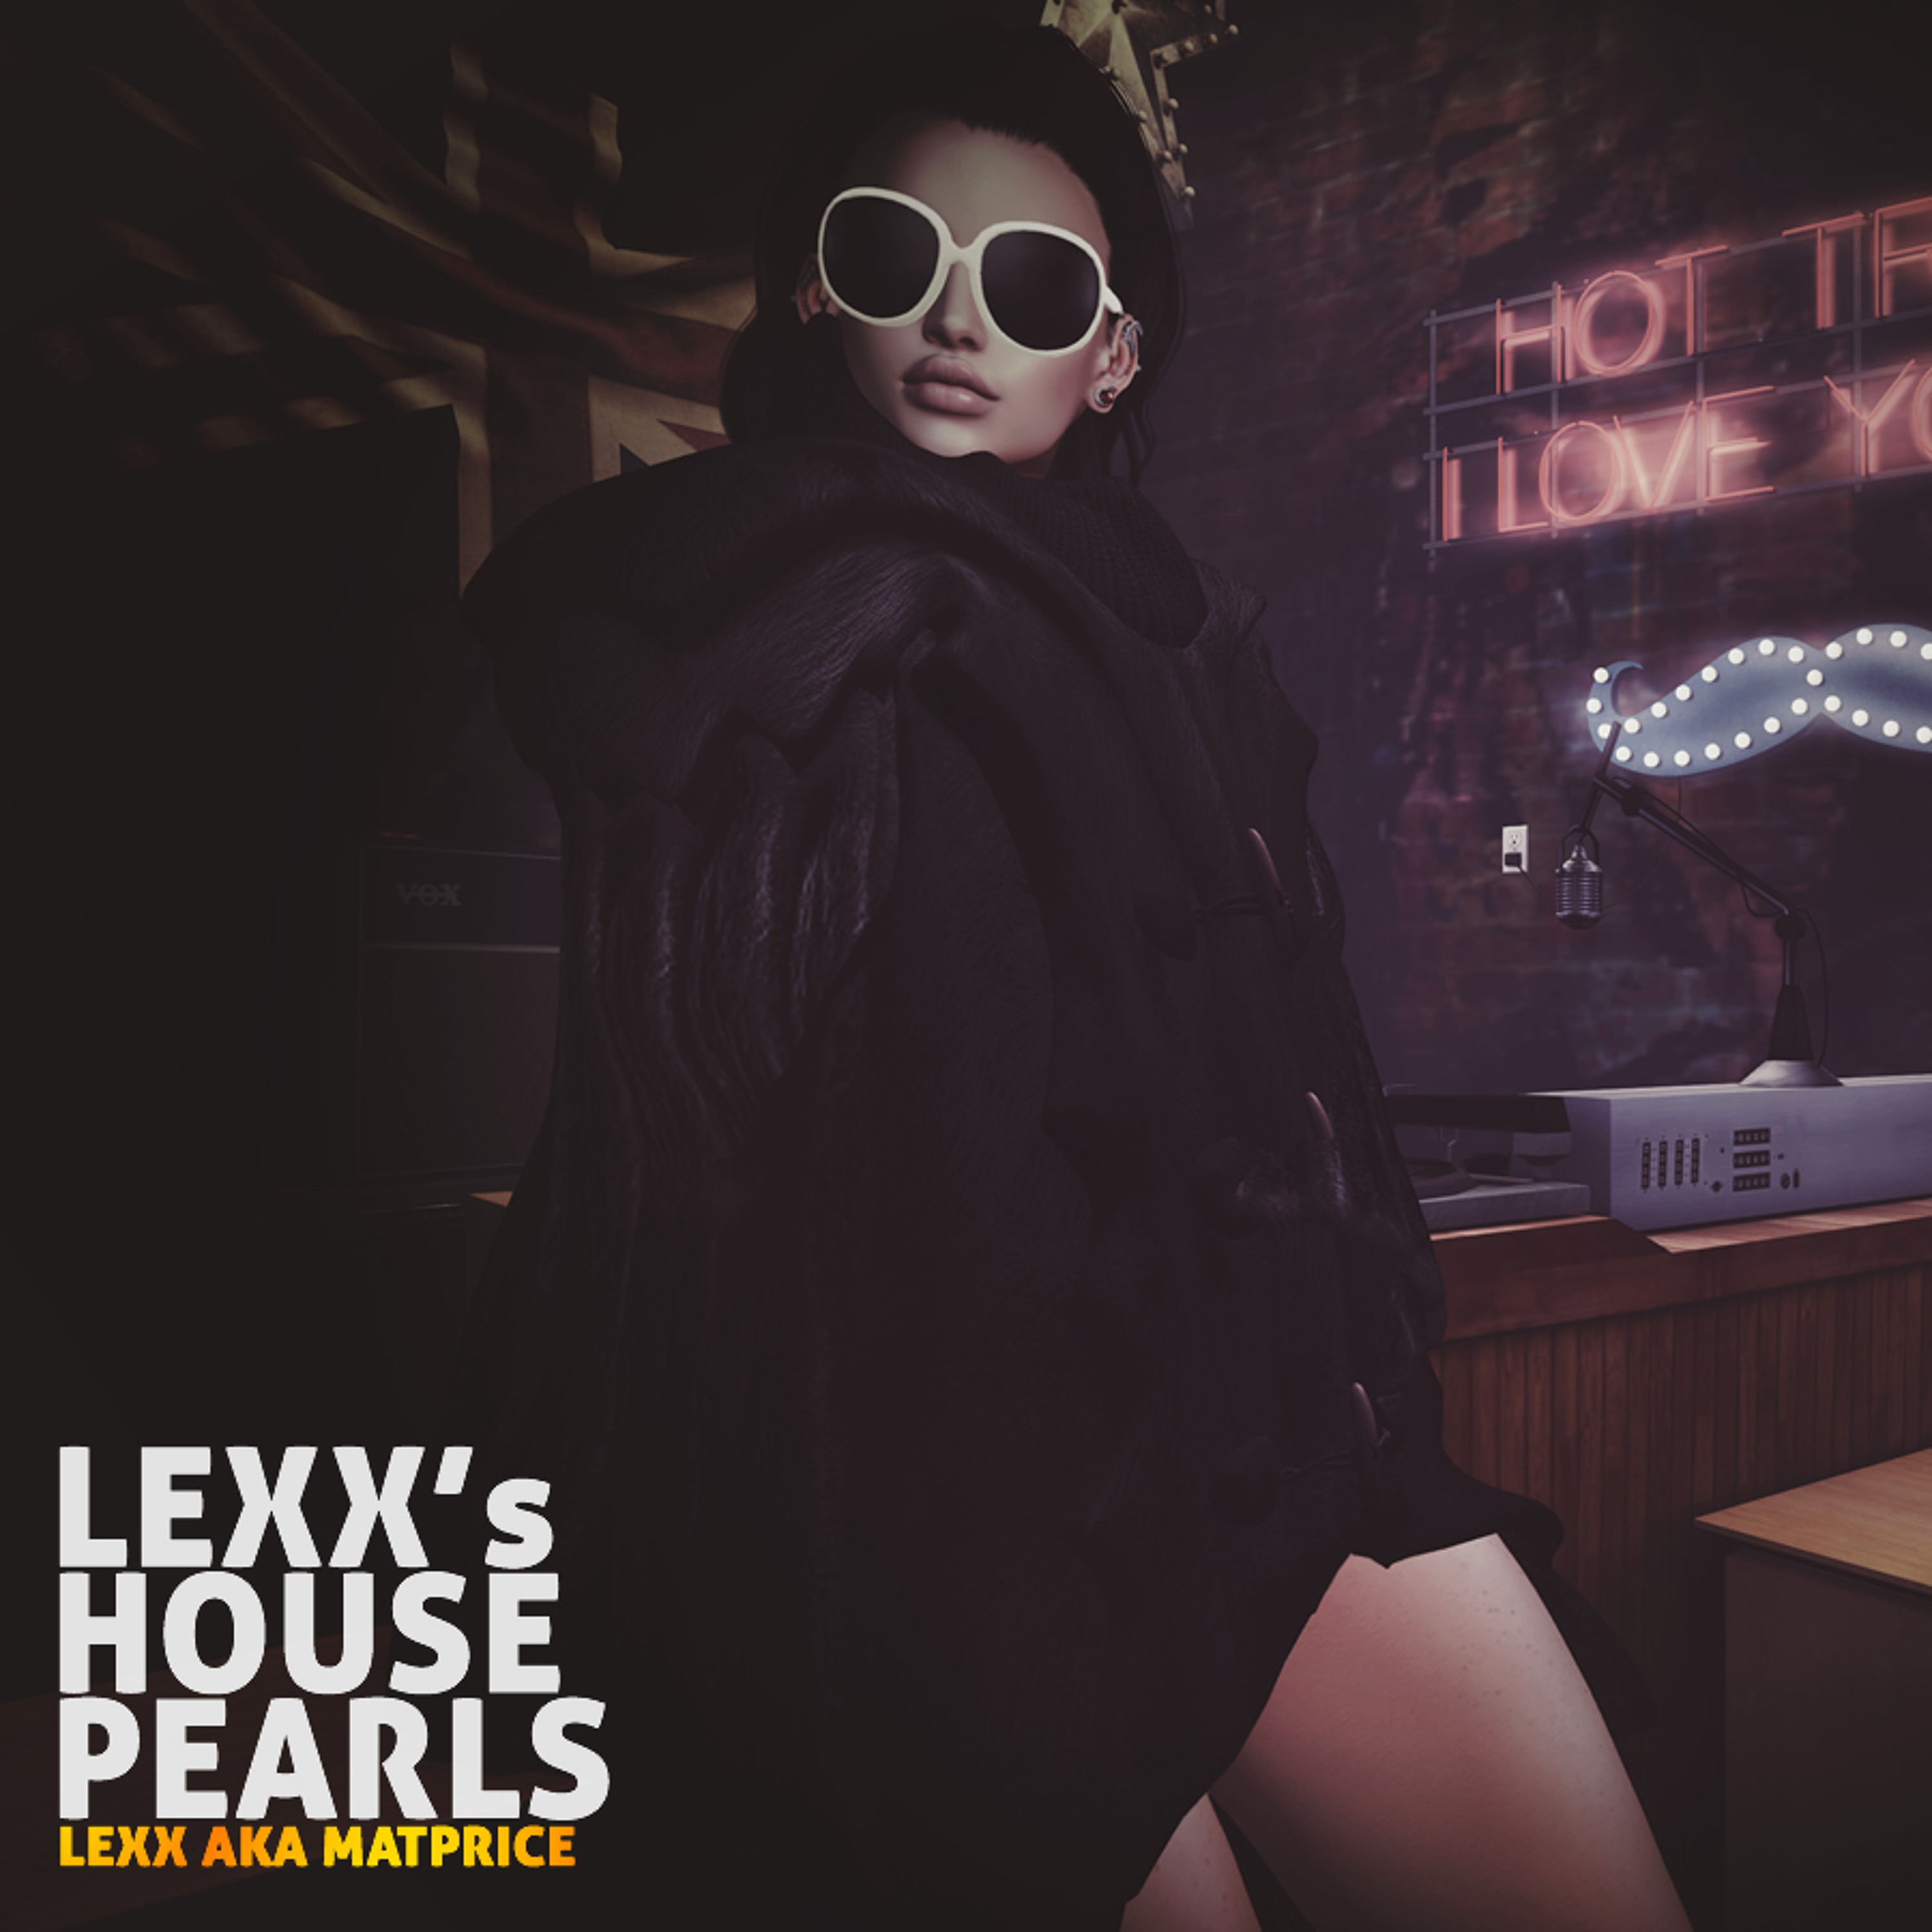 Lexx’s House Pearls